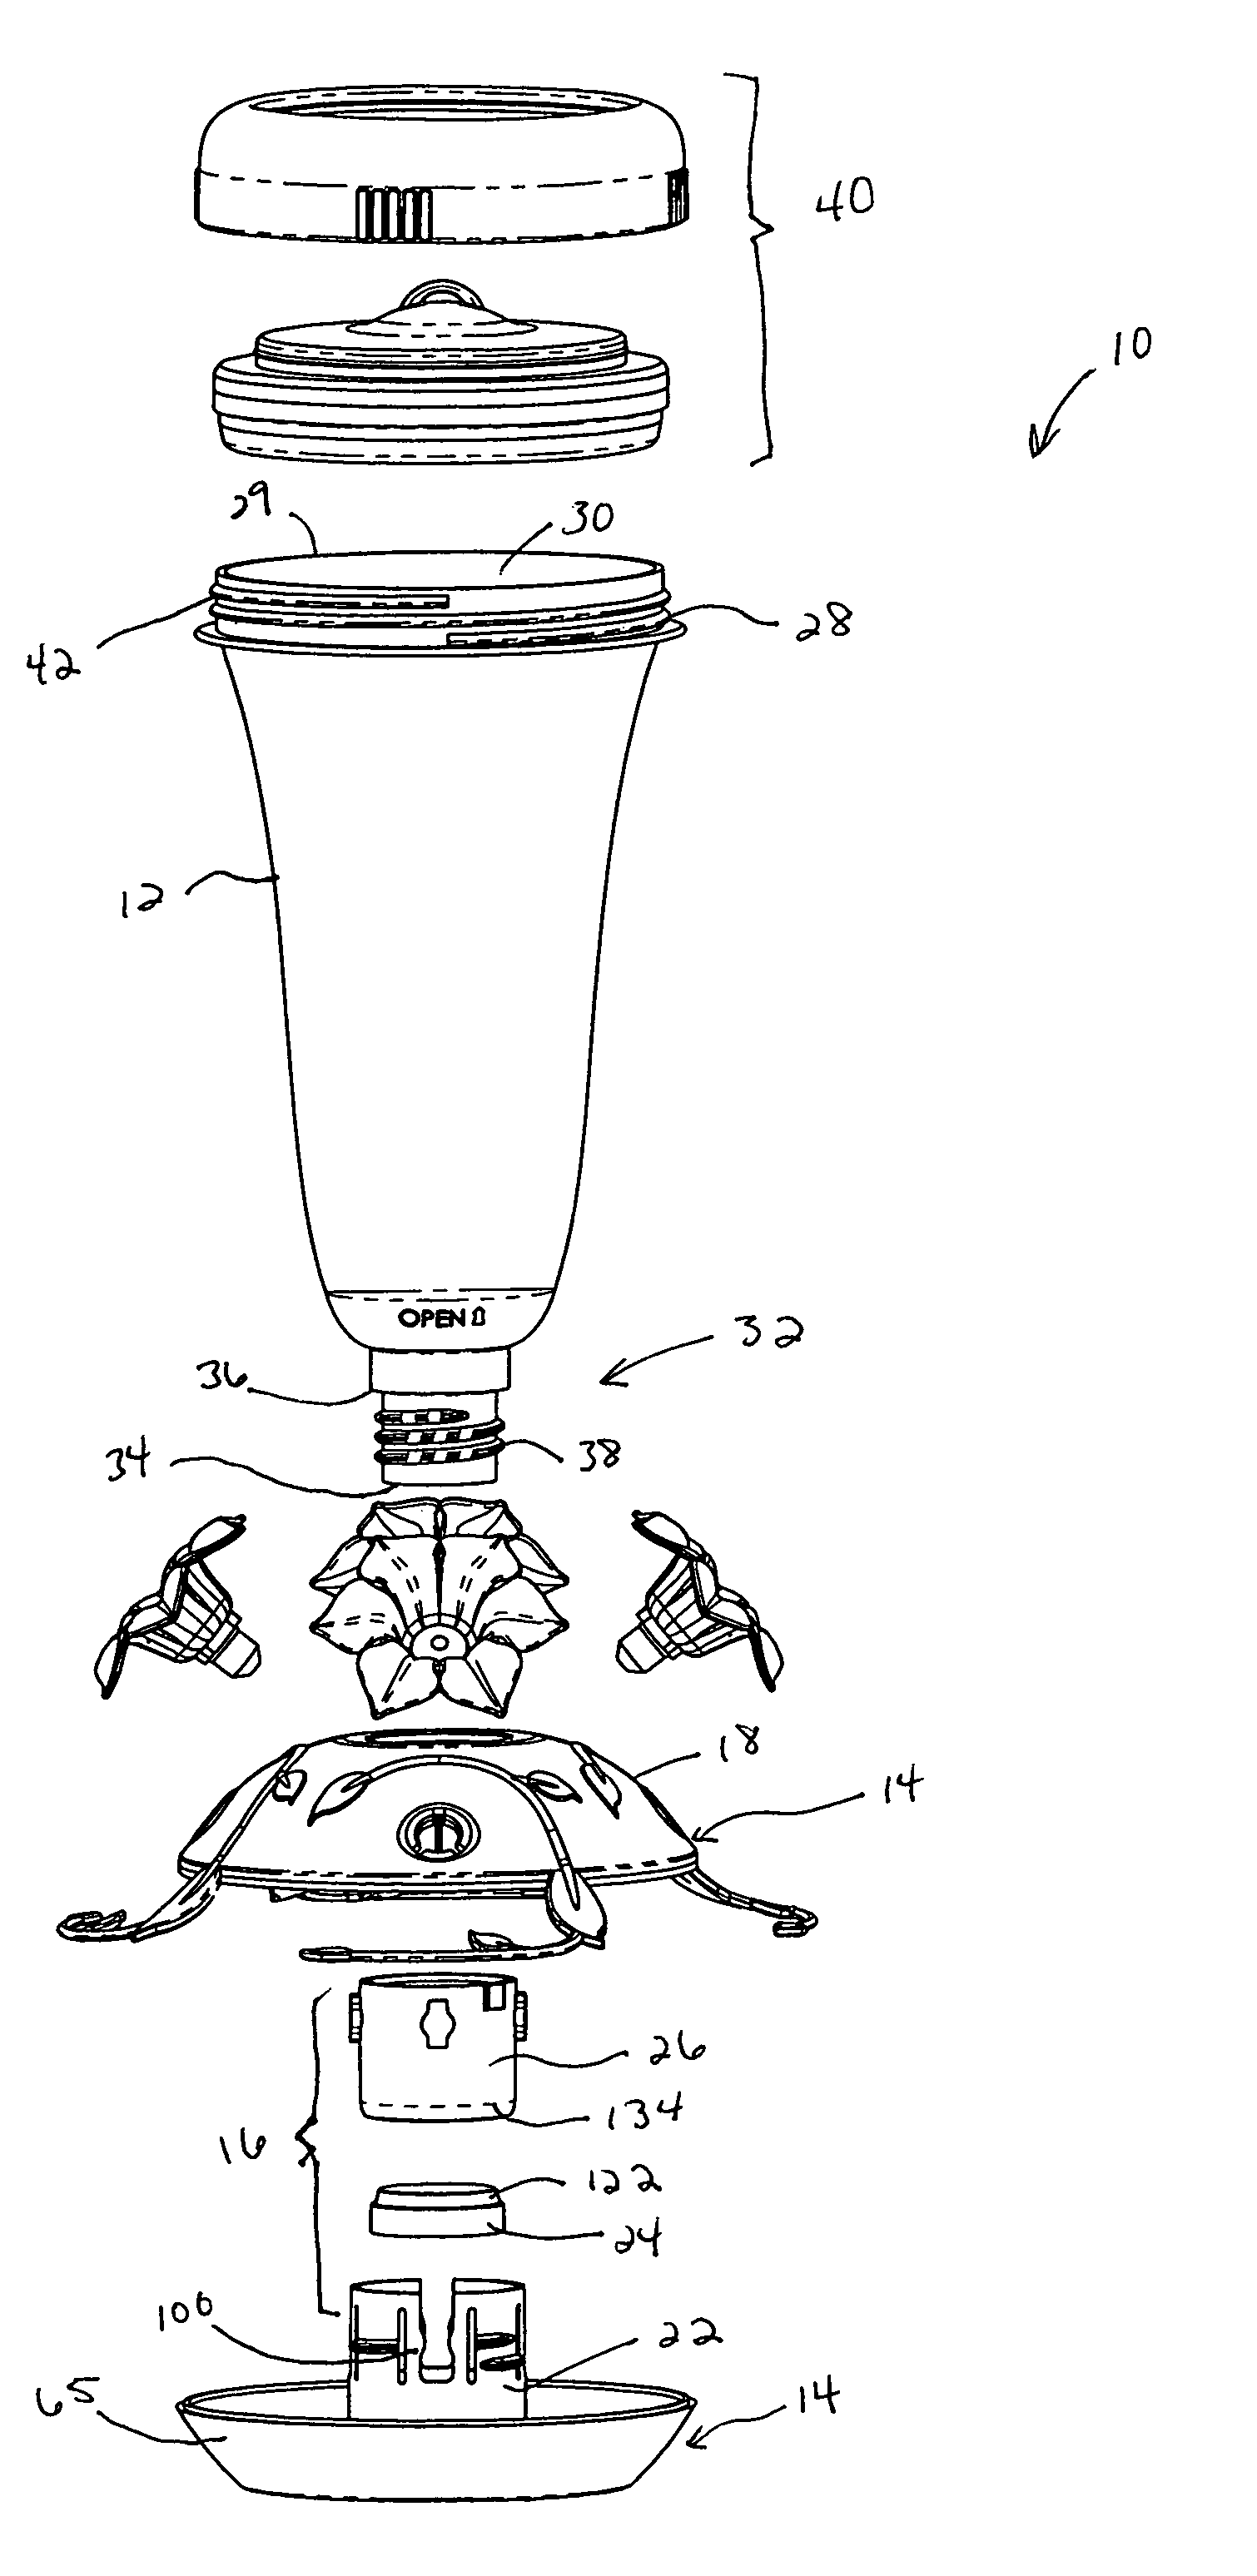 Top-fill hummingbird feeder with a cork-type top sealing member